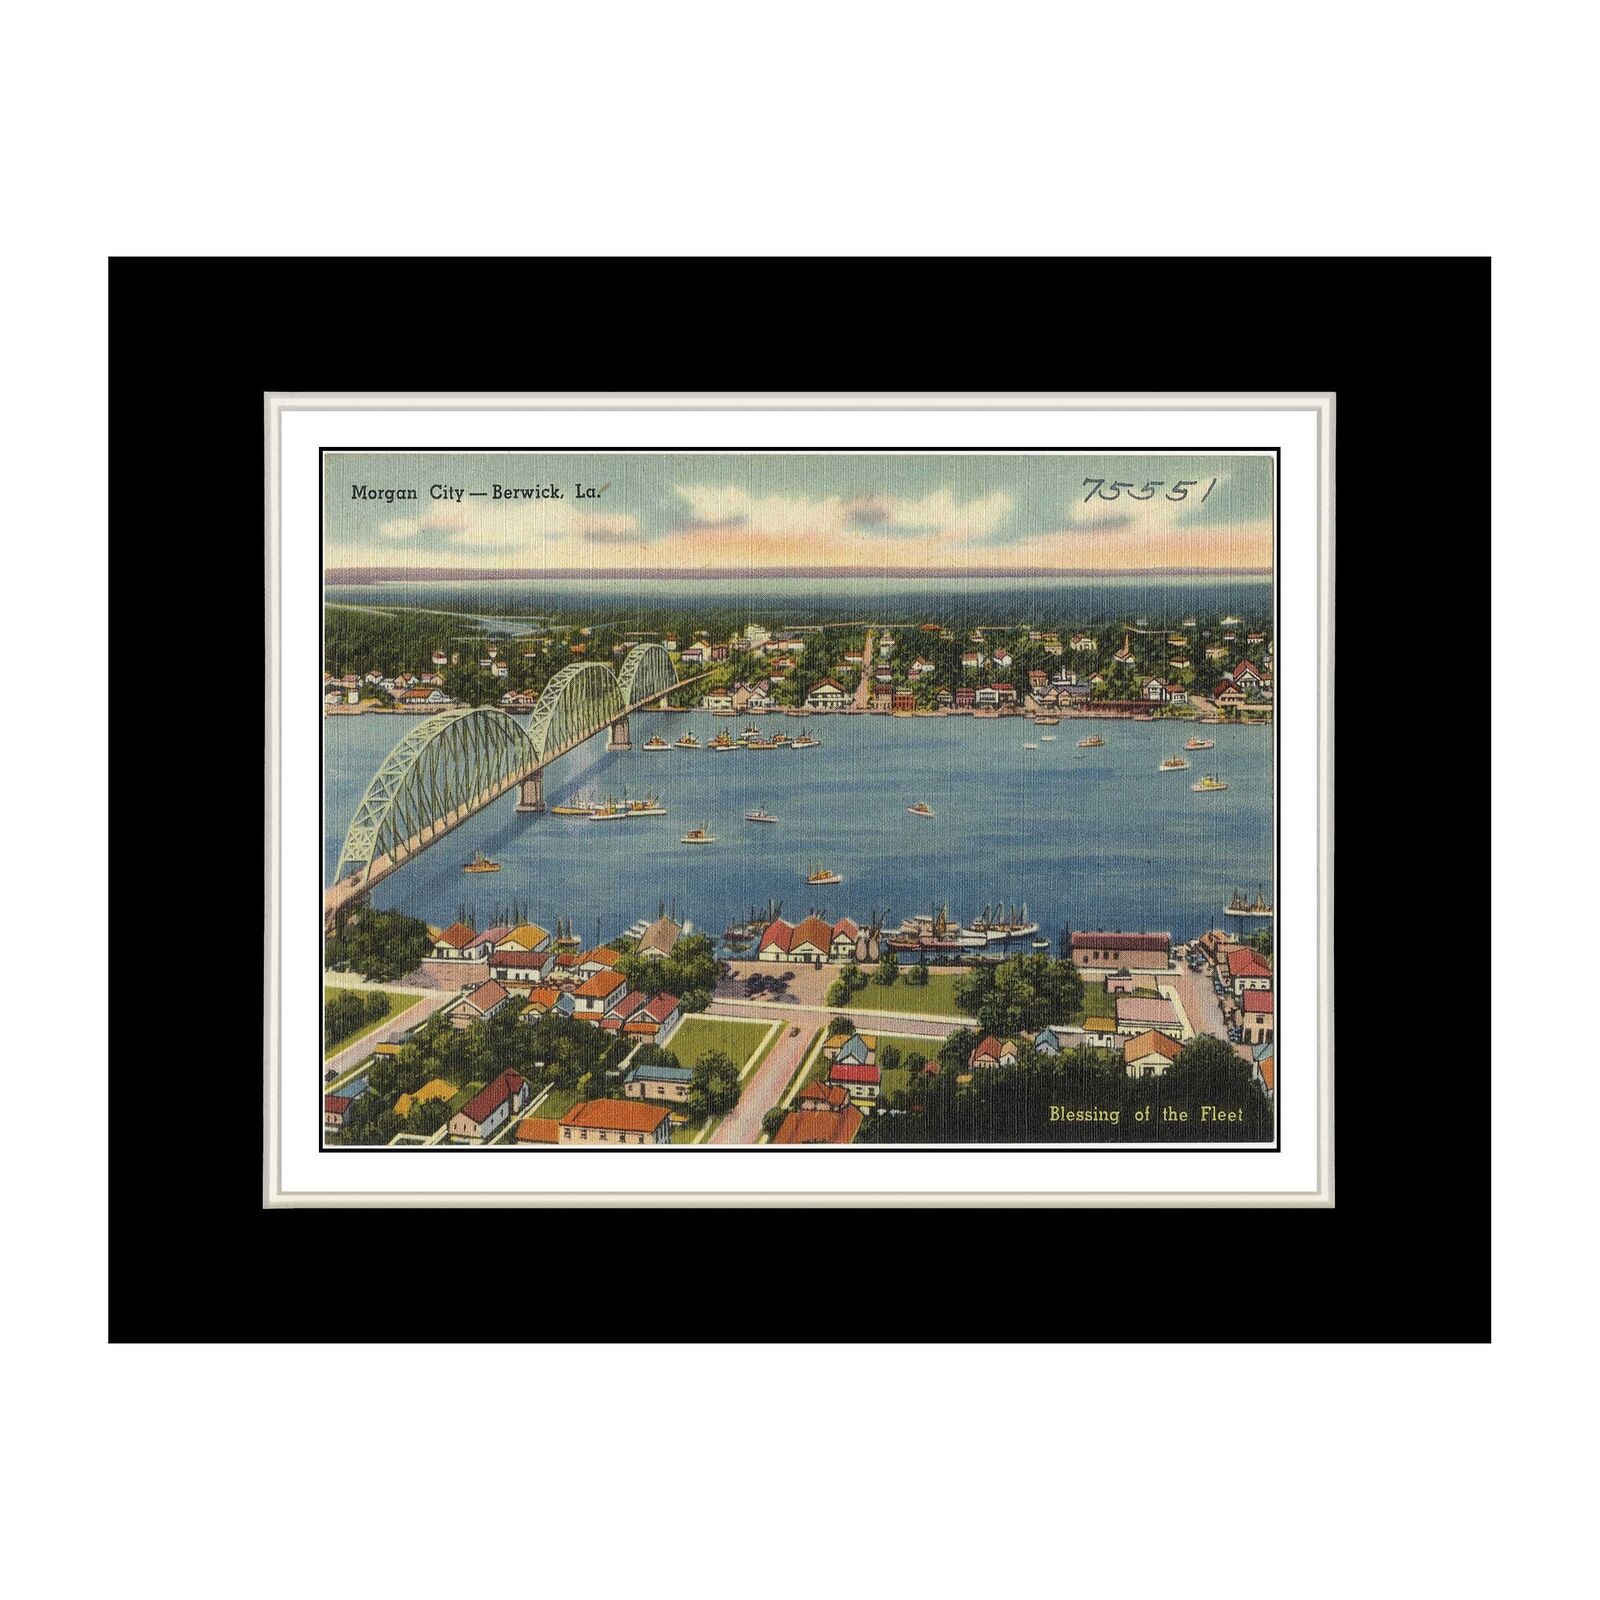 Art Print - Louisiana Postcard - Blessing of the fleet, Morgan City -- Berwick